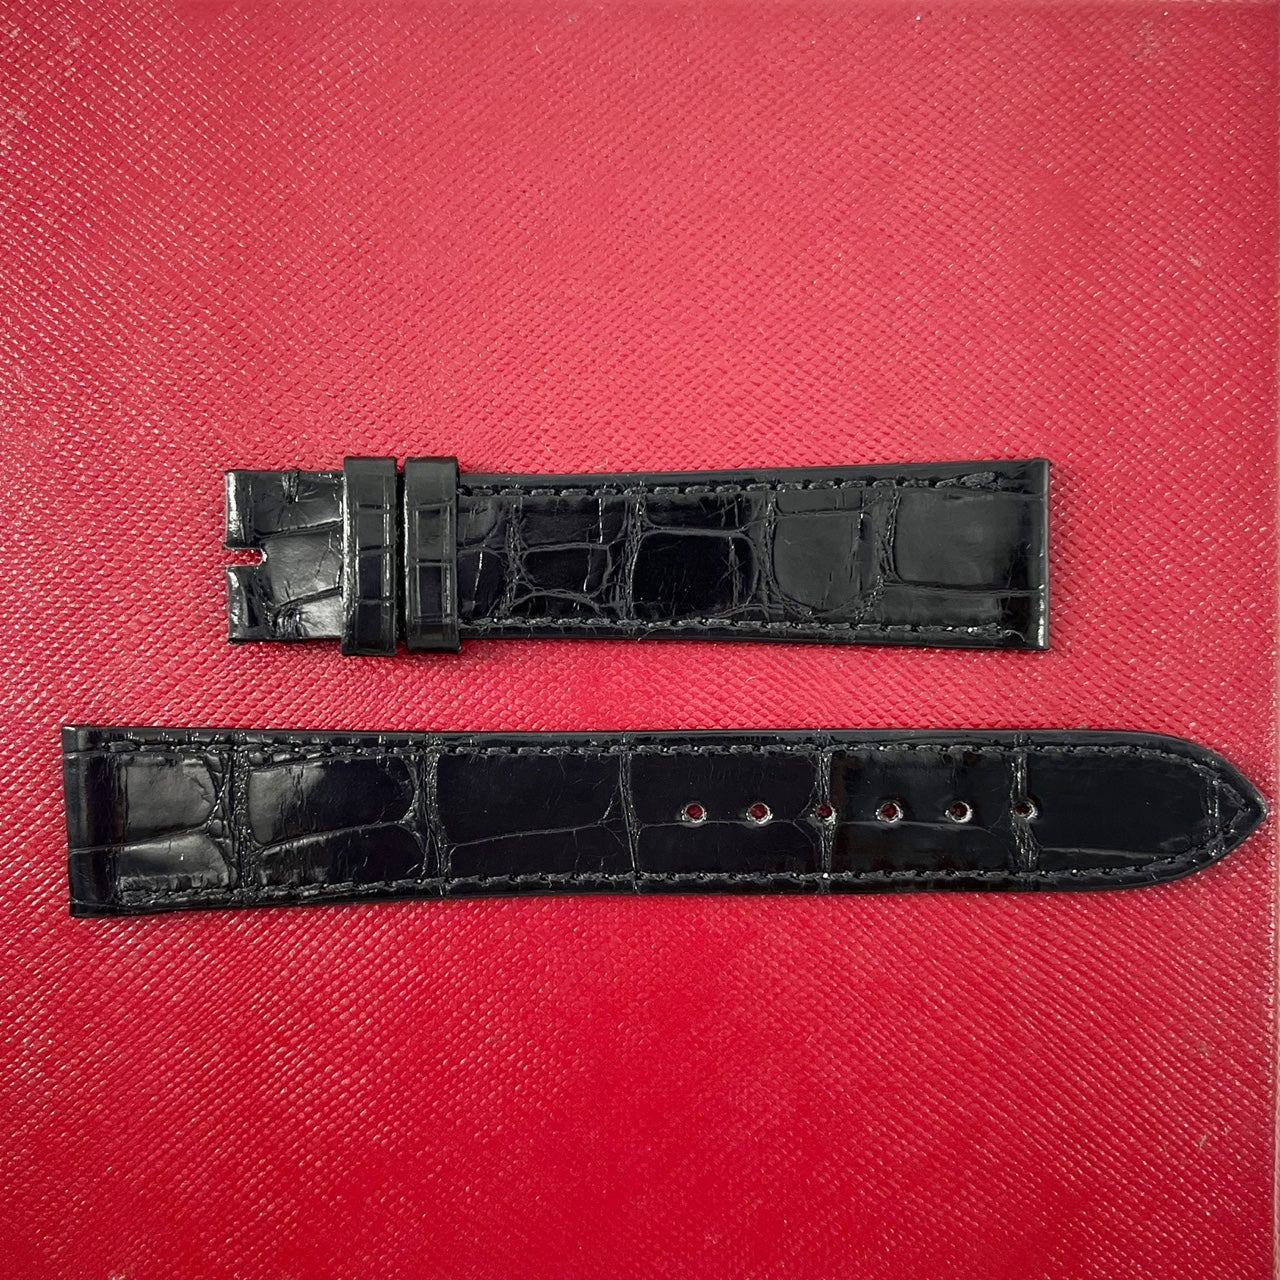 Guarantee Authentic Piaget Bright Alligator Piaget Flat Sewn Leather Strap Black 18mmx16mm Mans Regular Watch Band